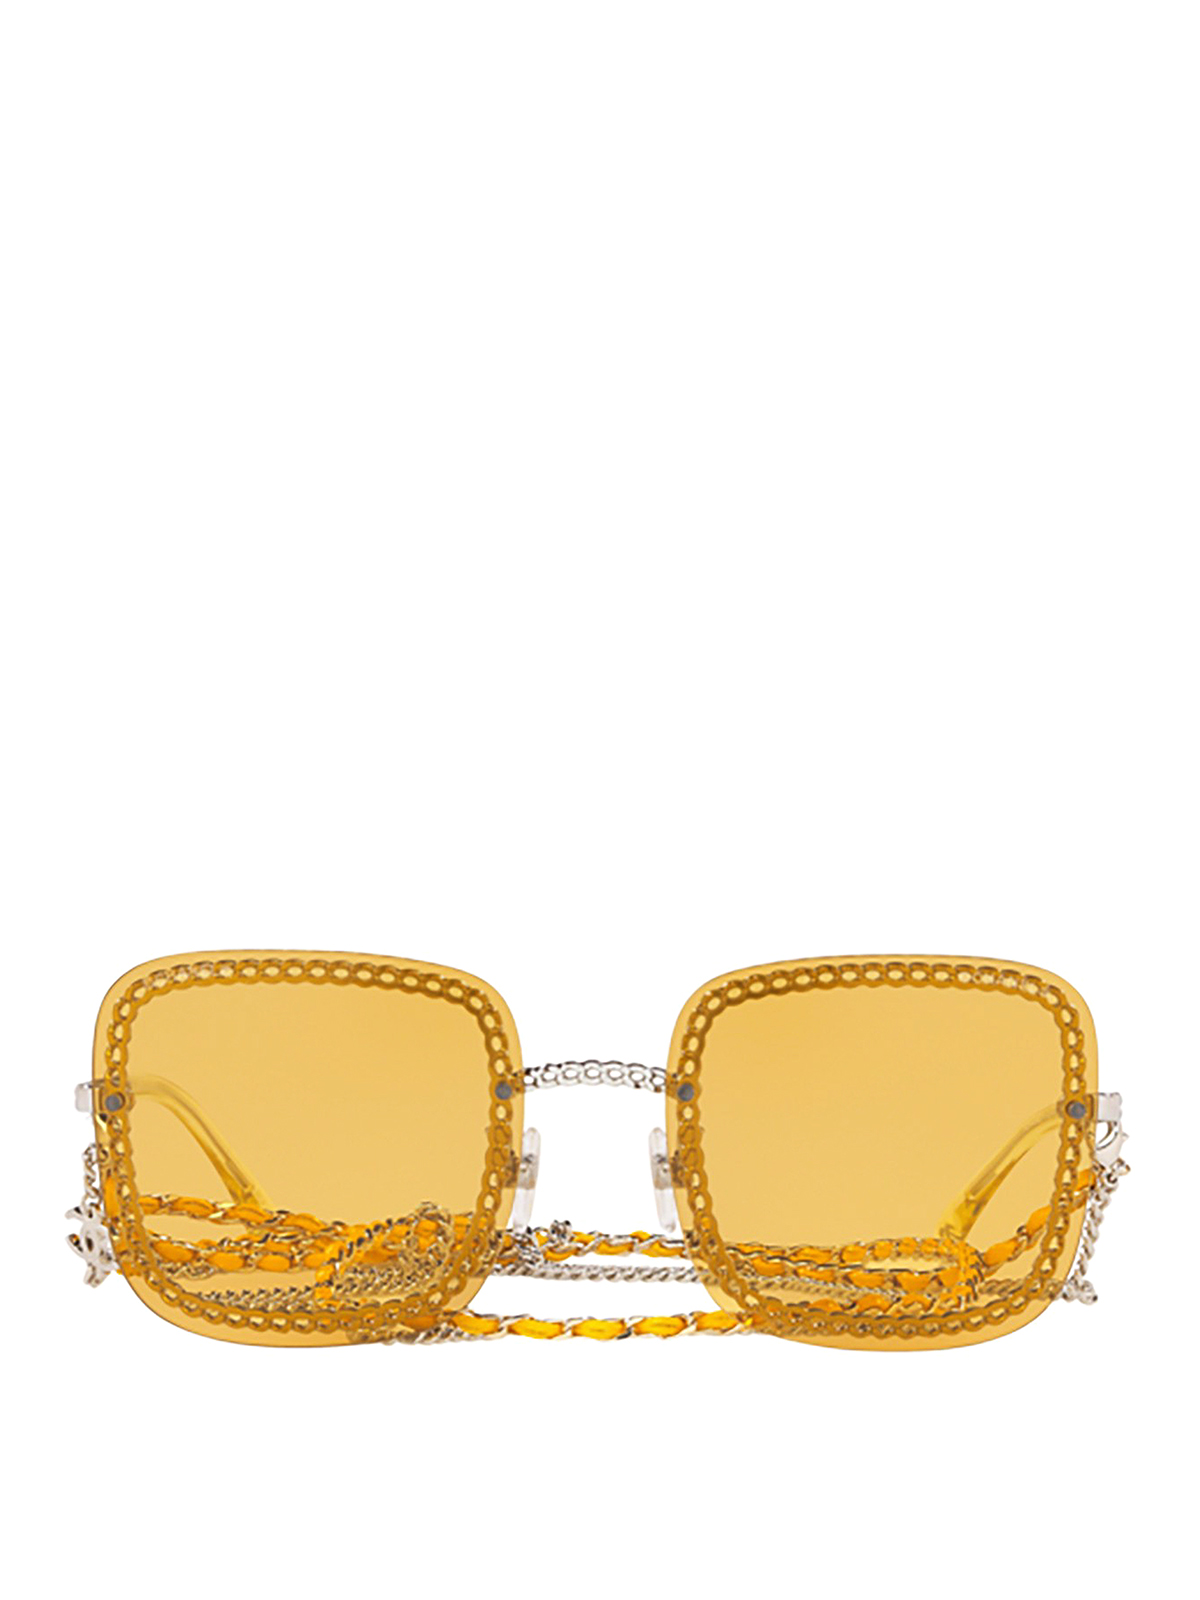 Sunglasses Chanel - embellished yellow squared sunglasses